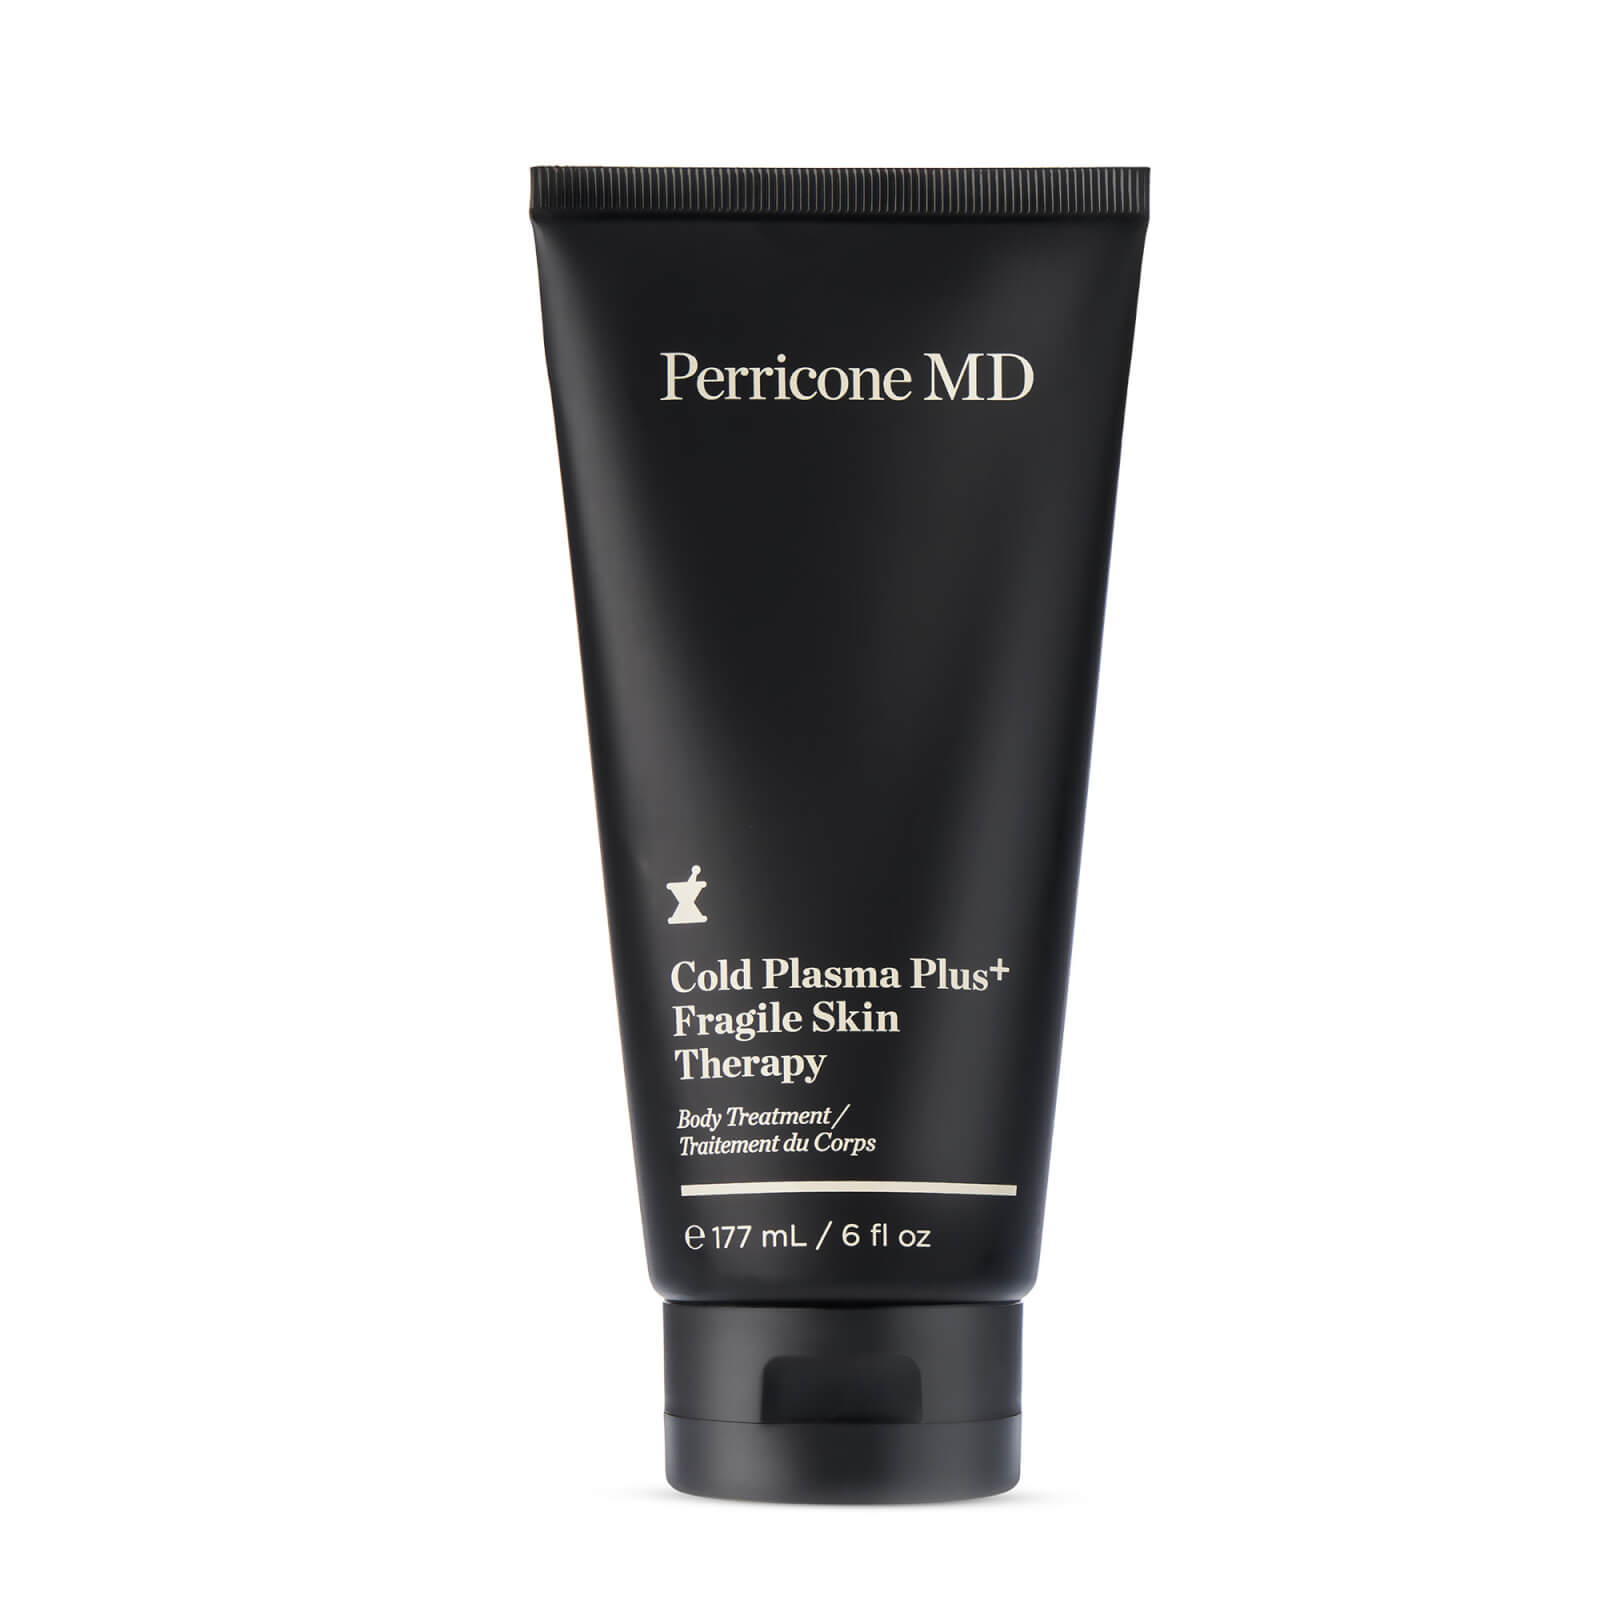 Perricone Md Cold Plasma Plus+ Fragile Skin Therapy